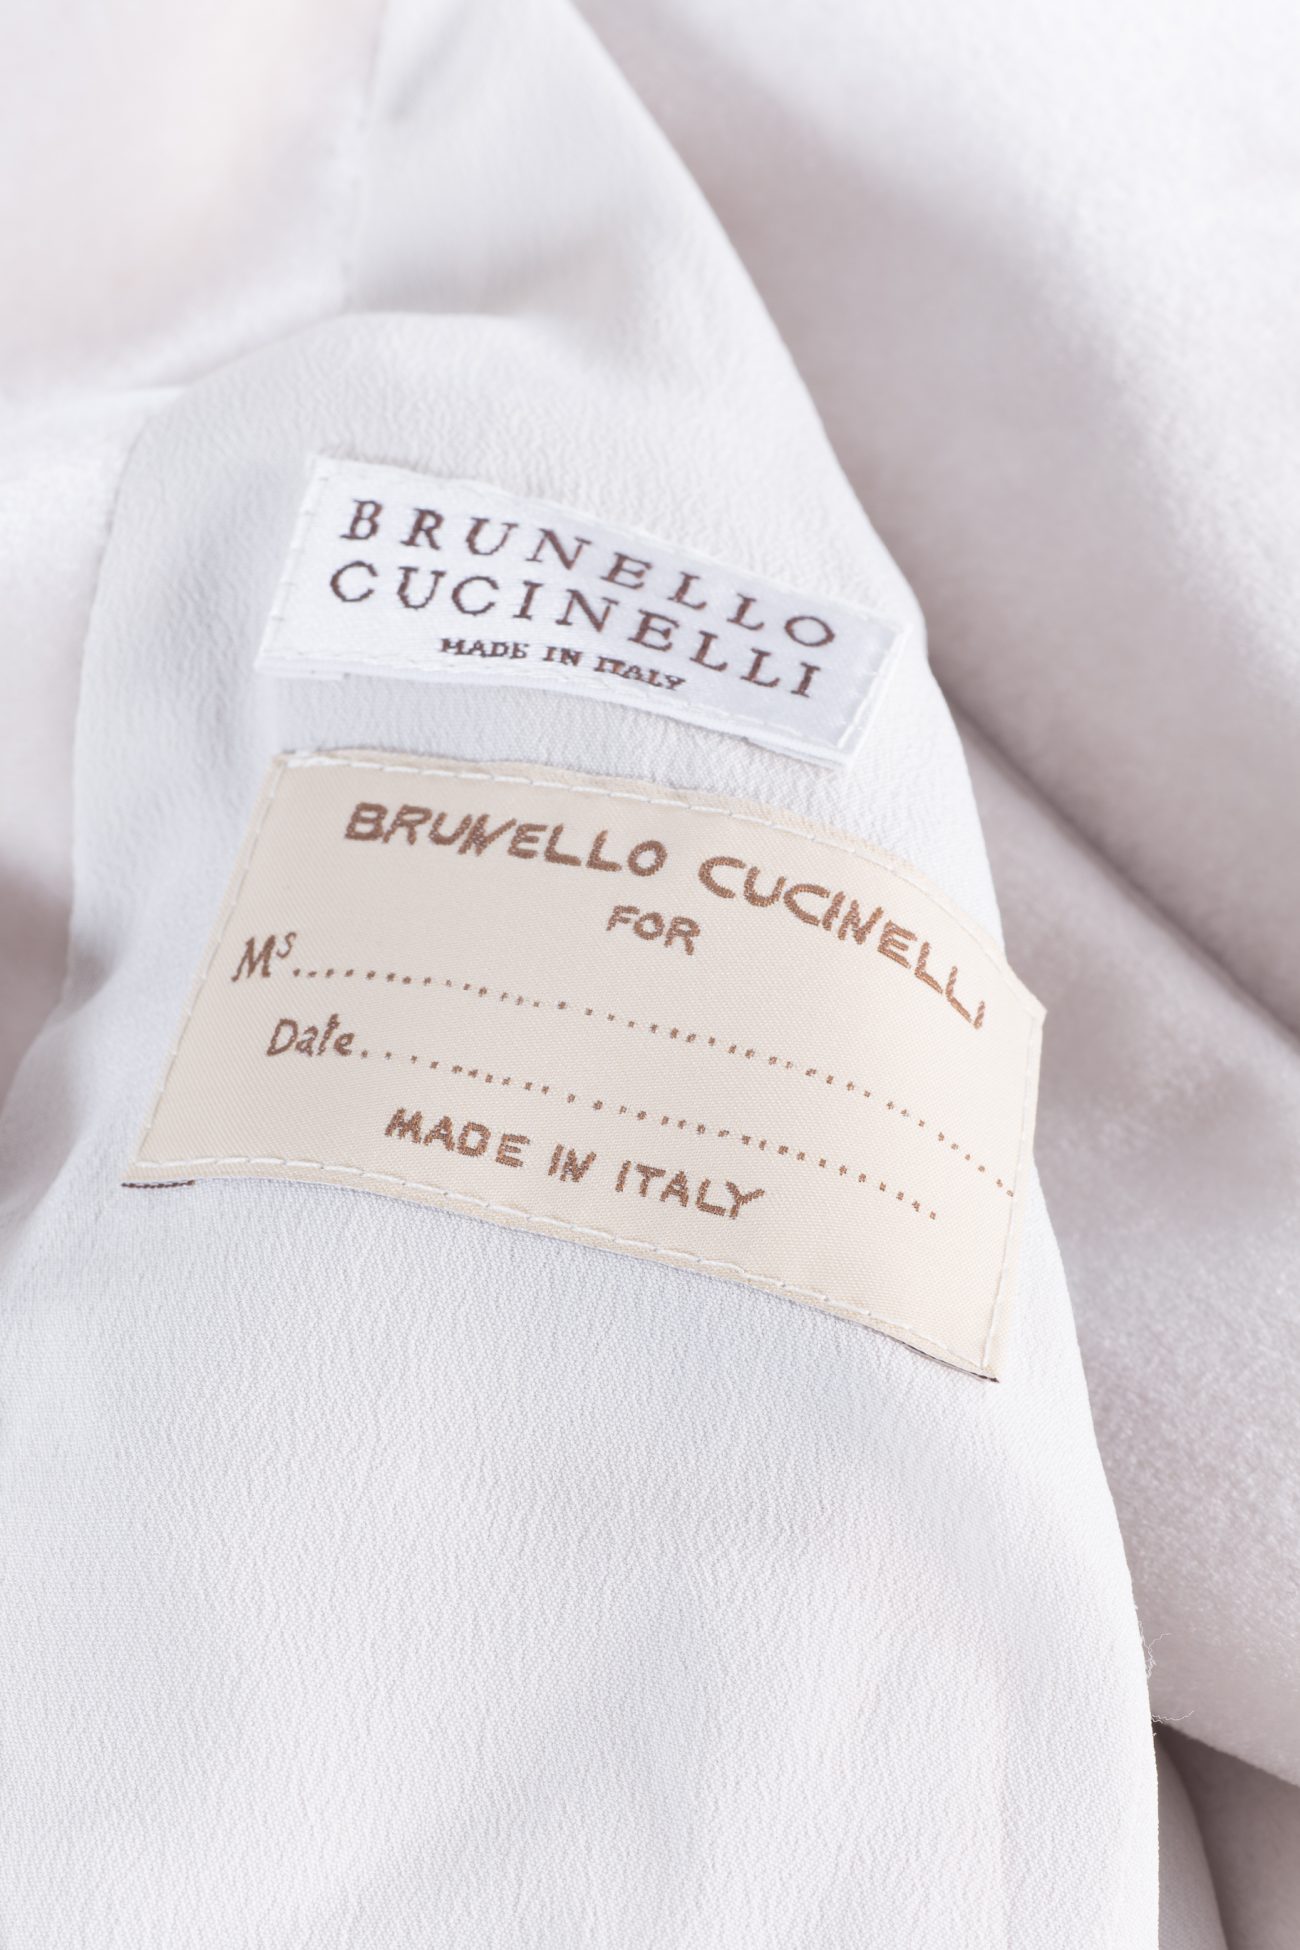 Brunello Cucinelli velvet blazer